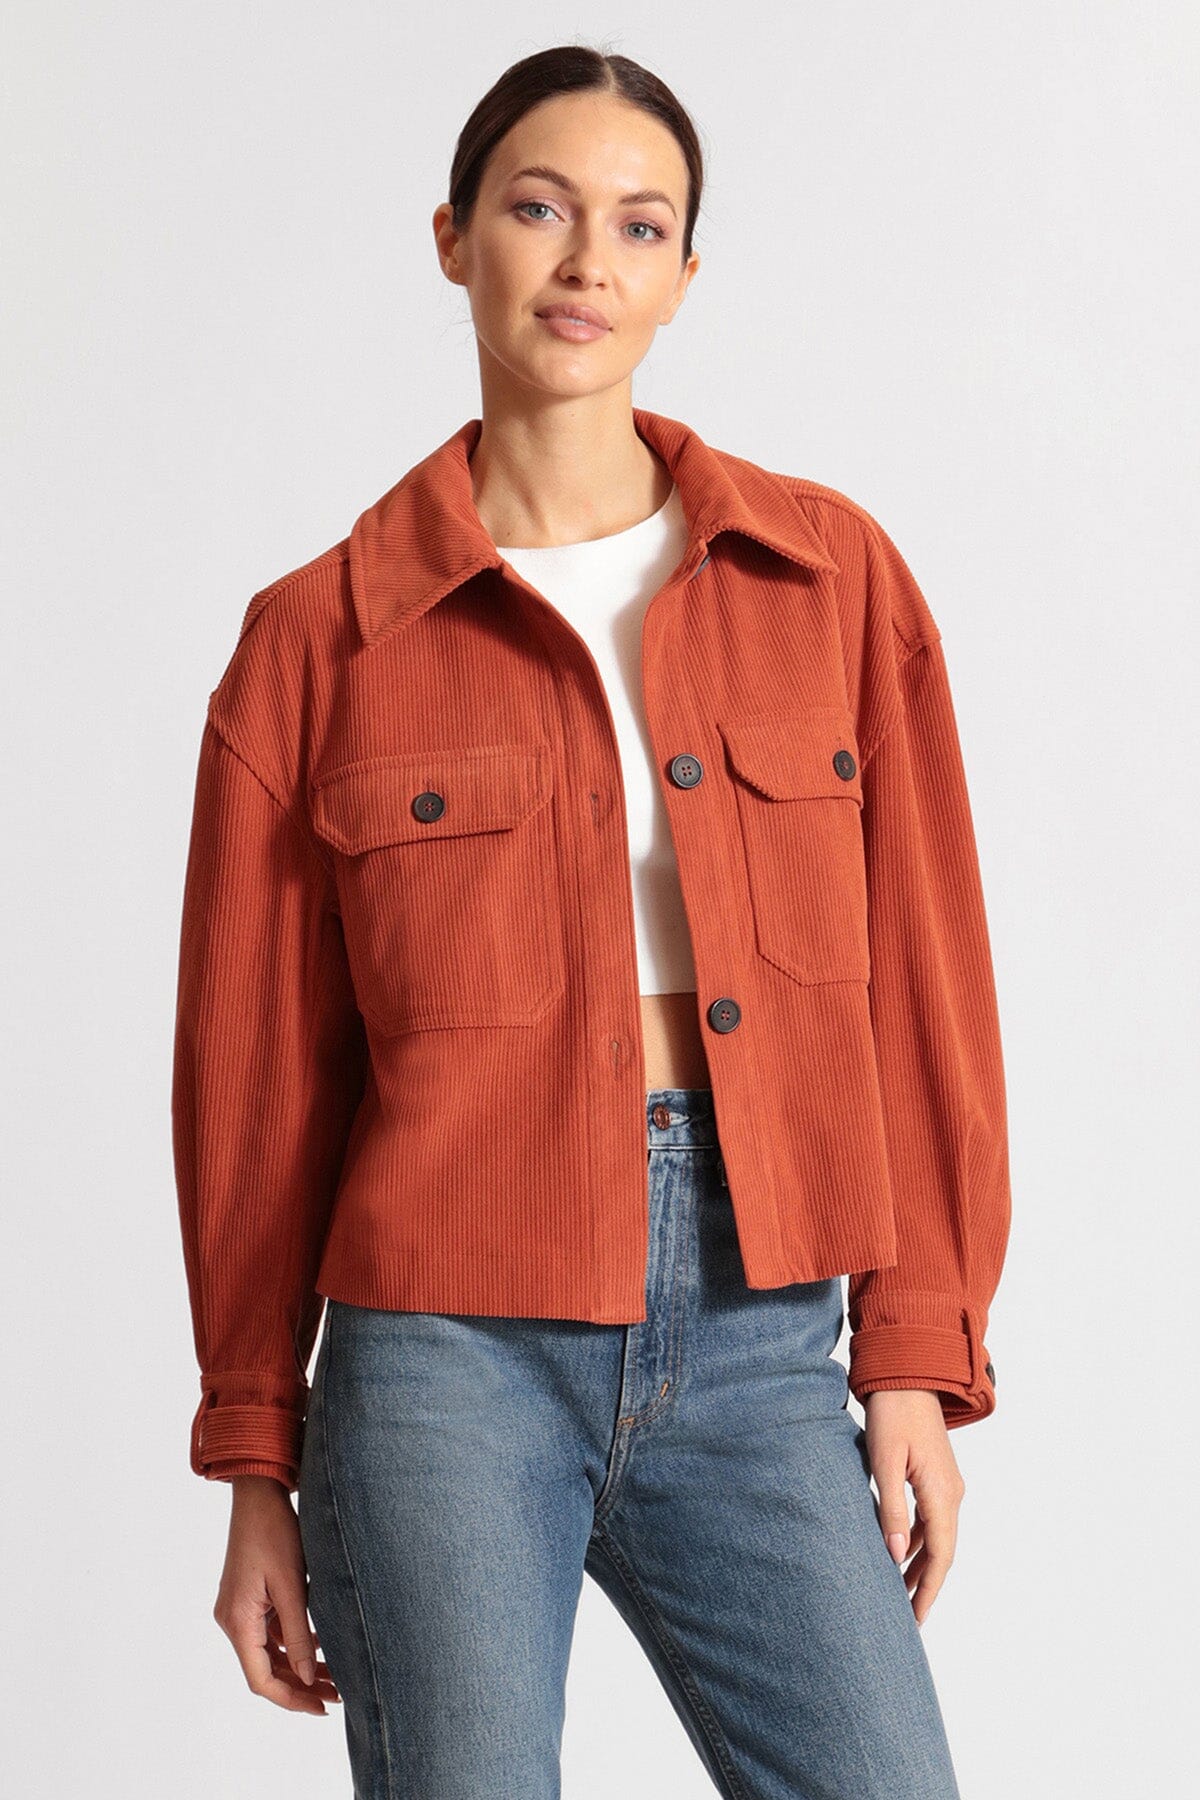 Rust orange relaxed corduroy shacket shirt jacket coat - figure flattering day to night shackets jackets for women